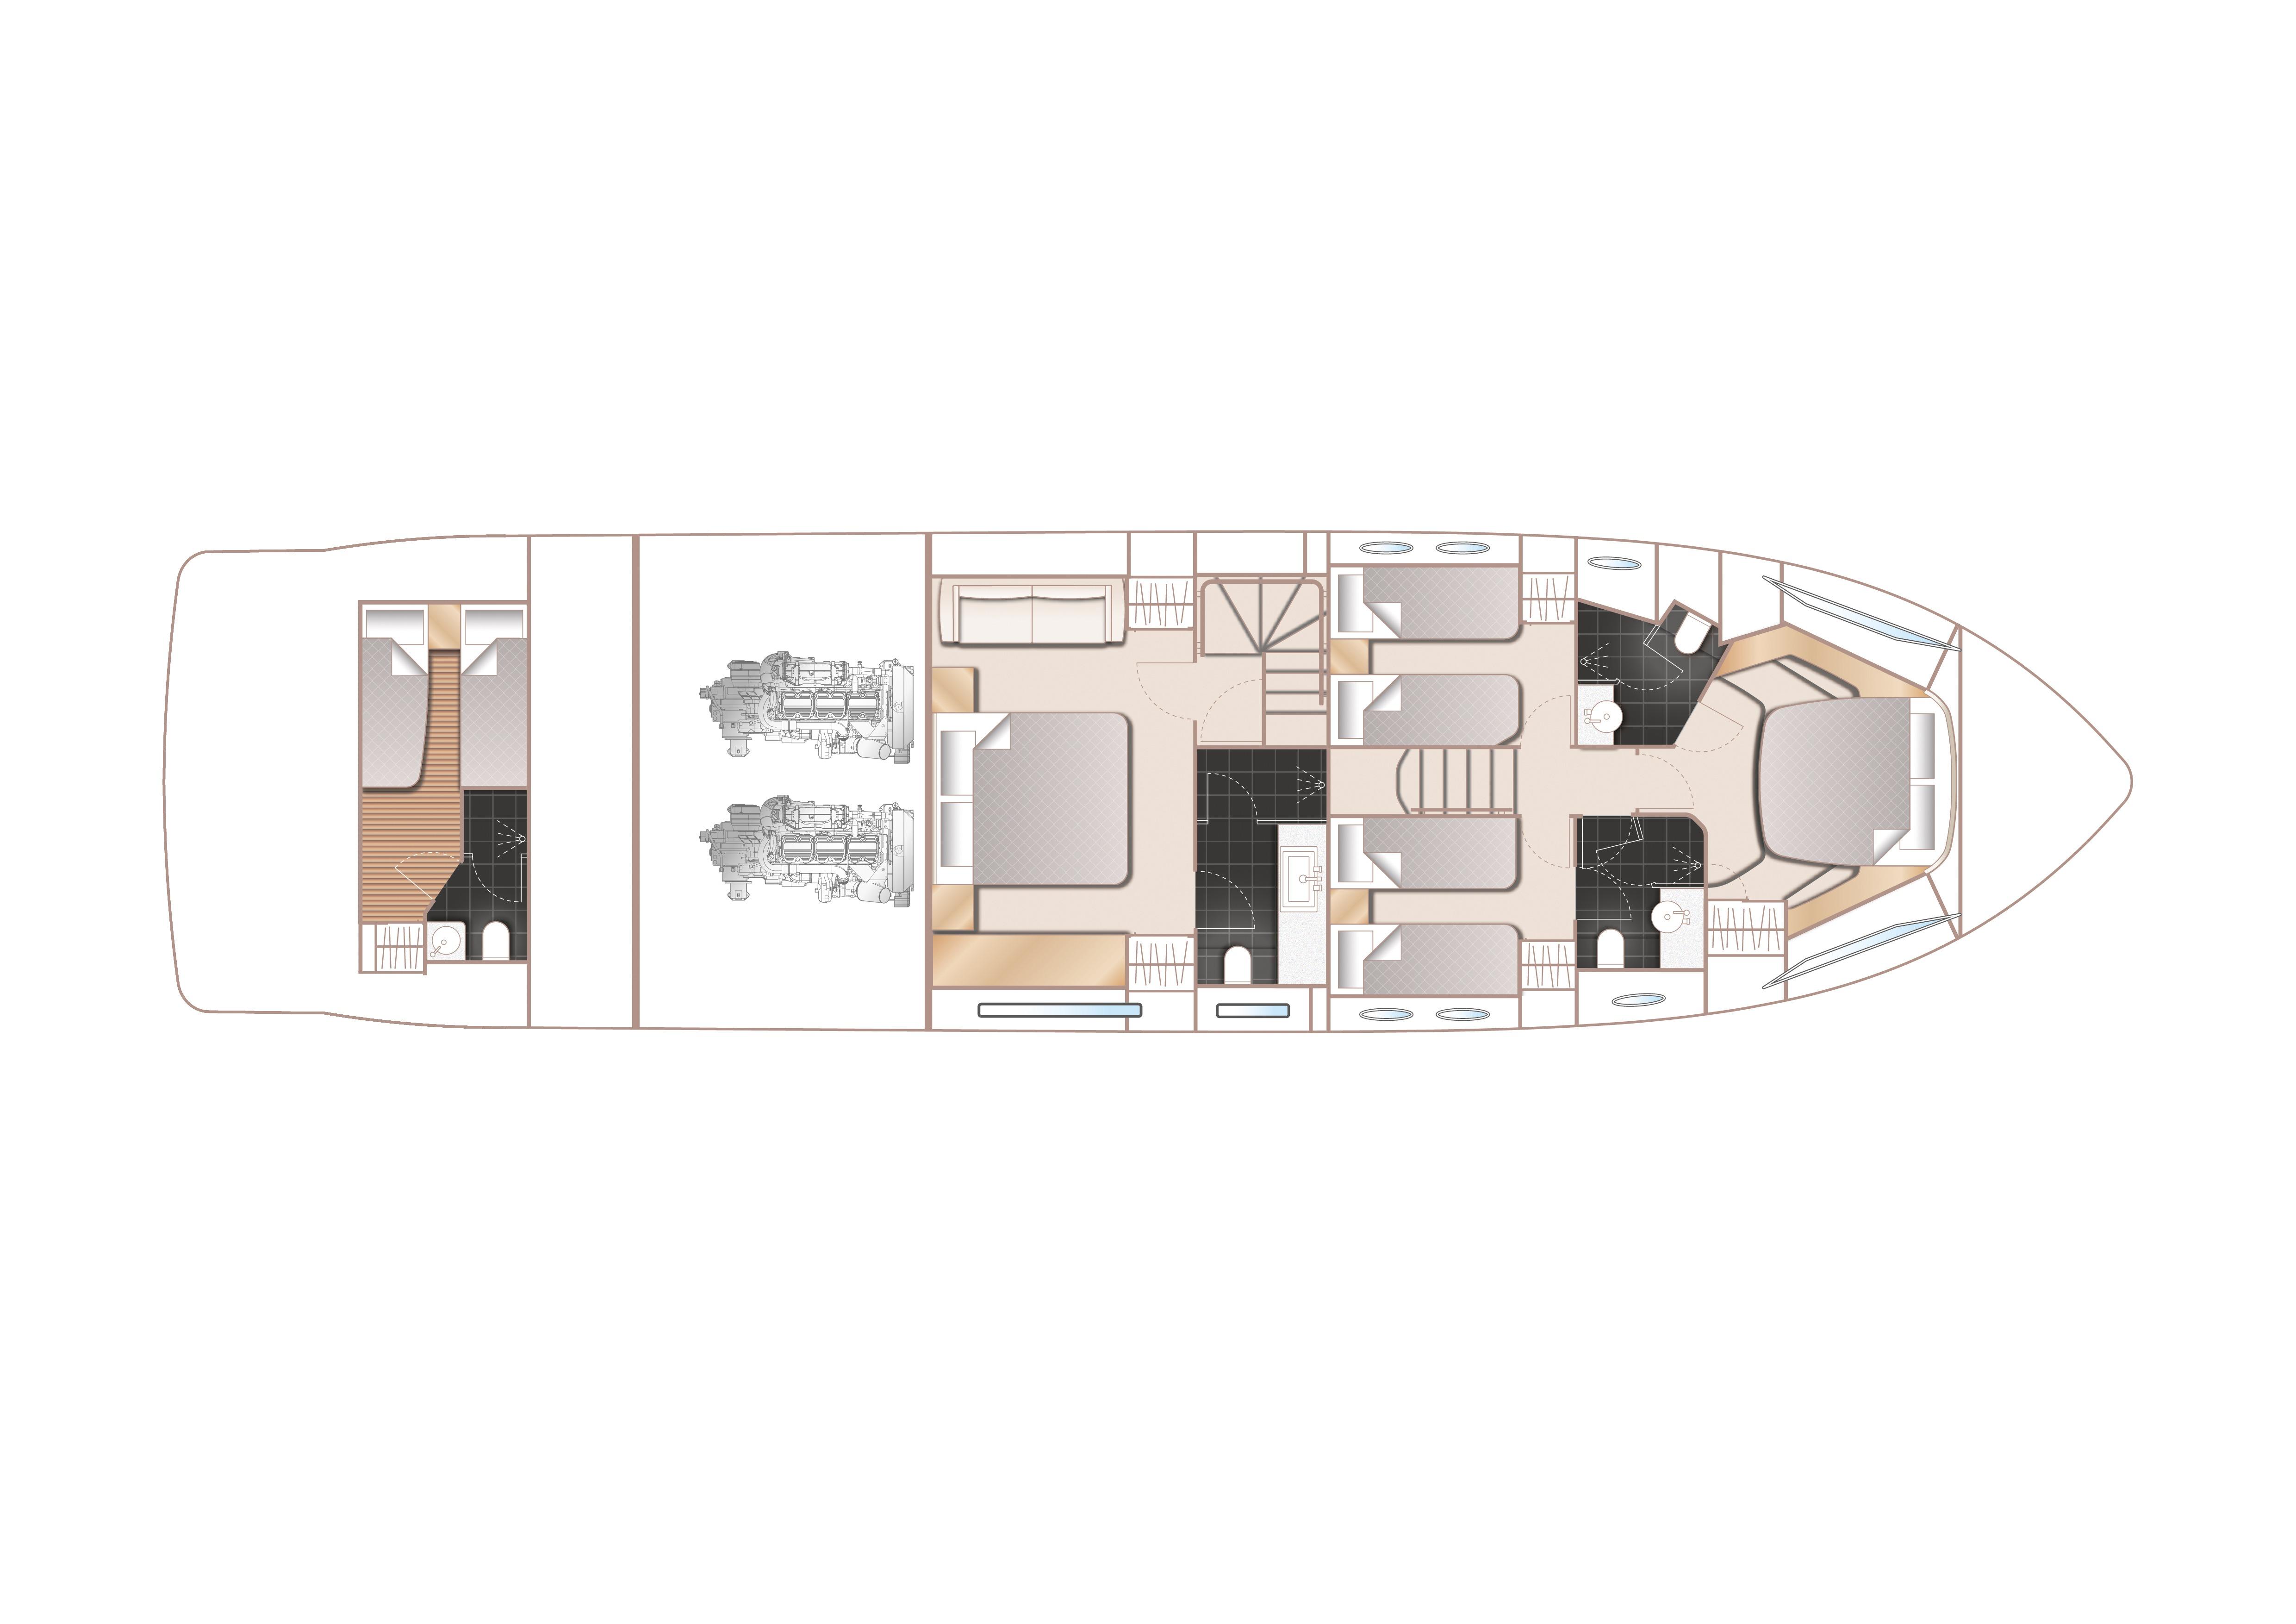 Manufacturer Provided Image: Princess 68 Lower Deck Layout Plan